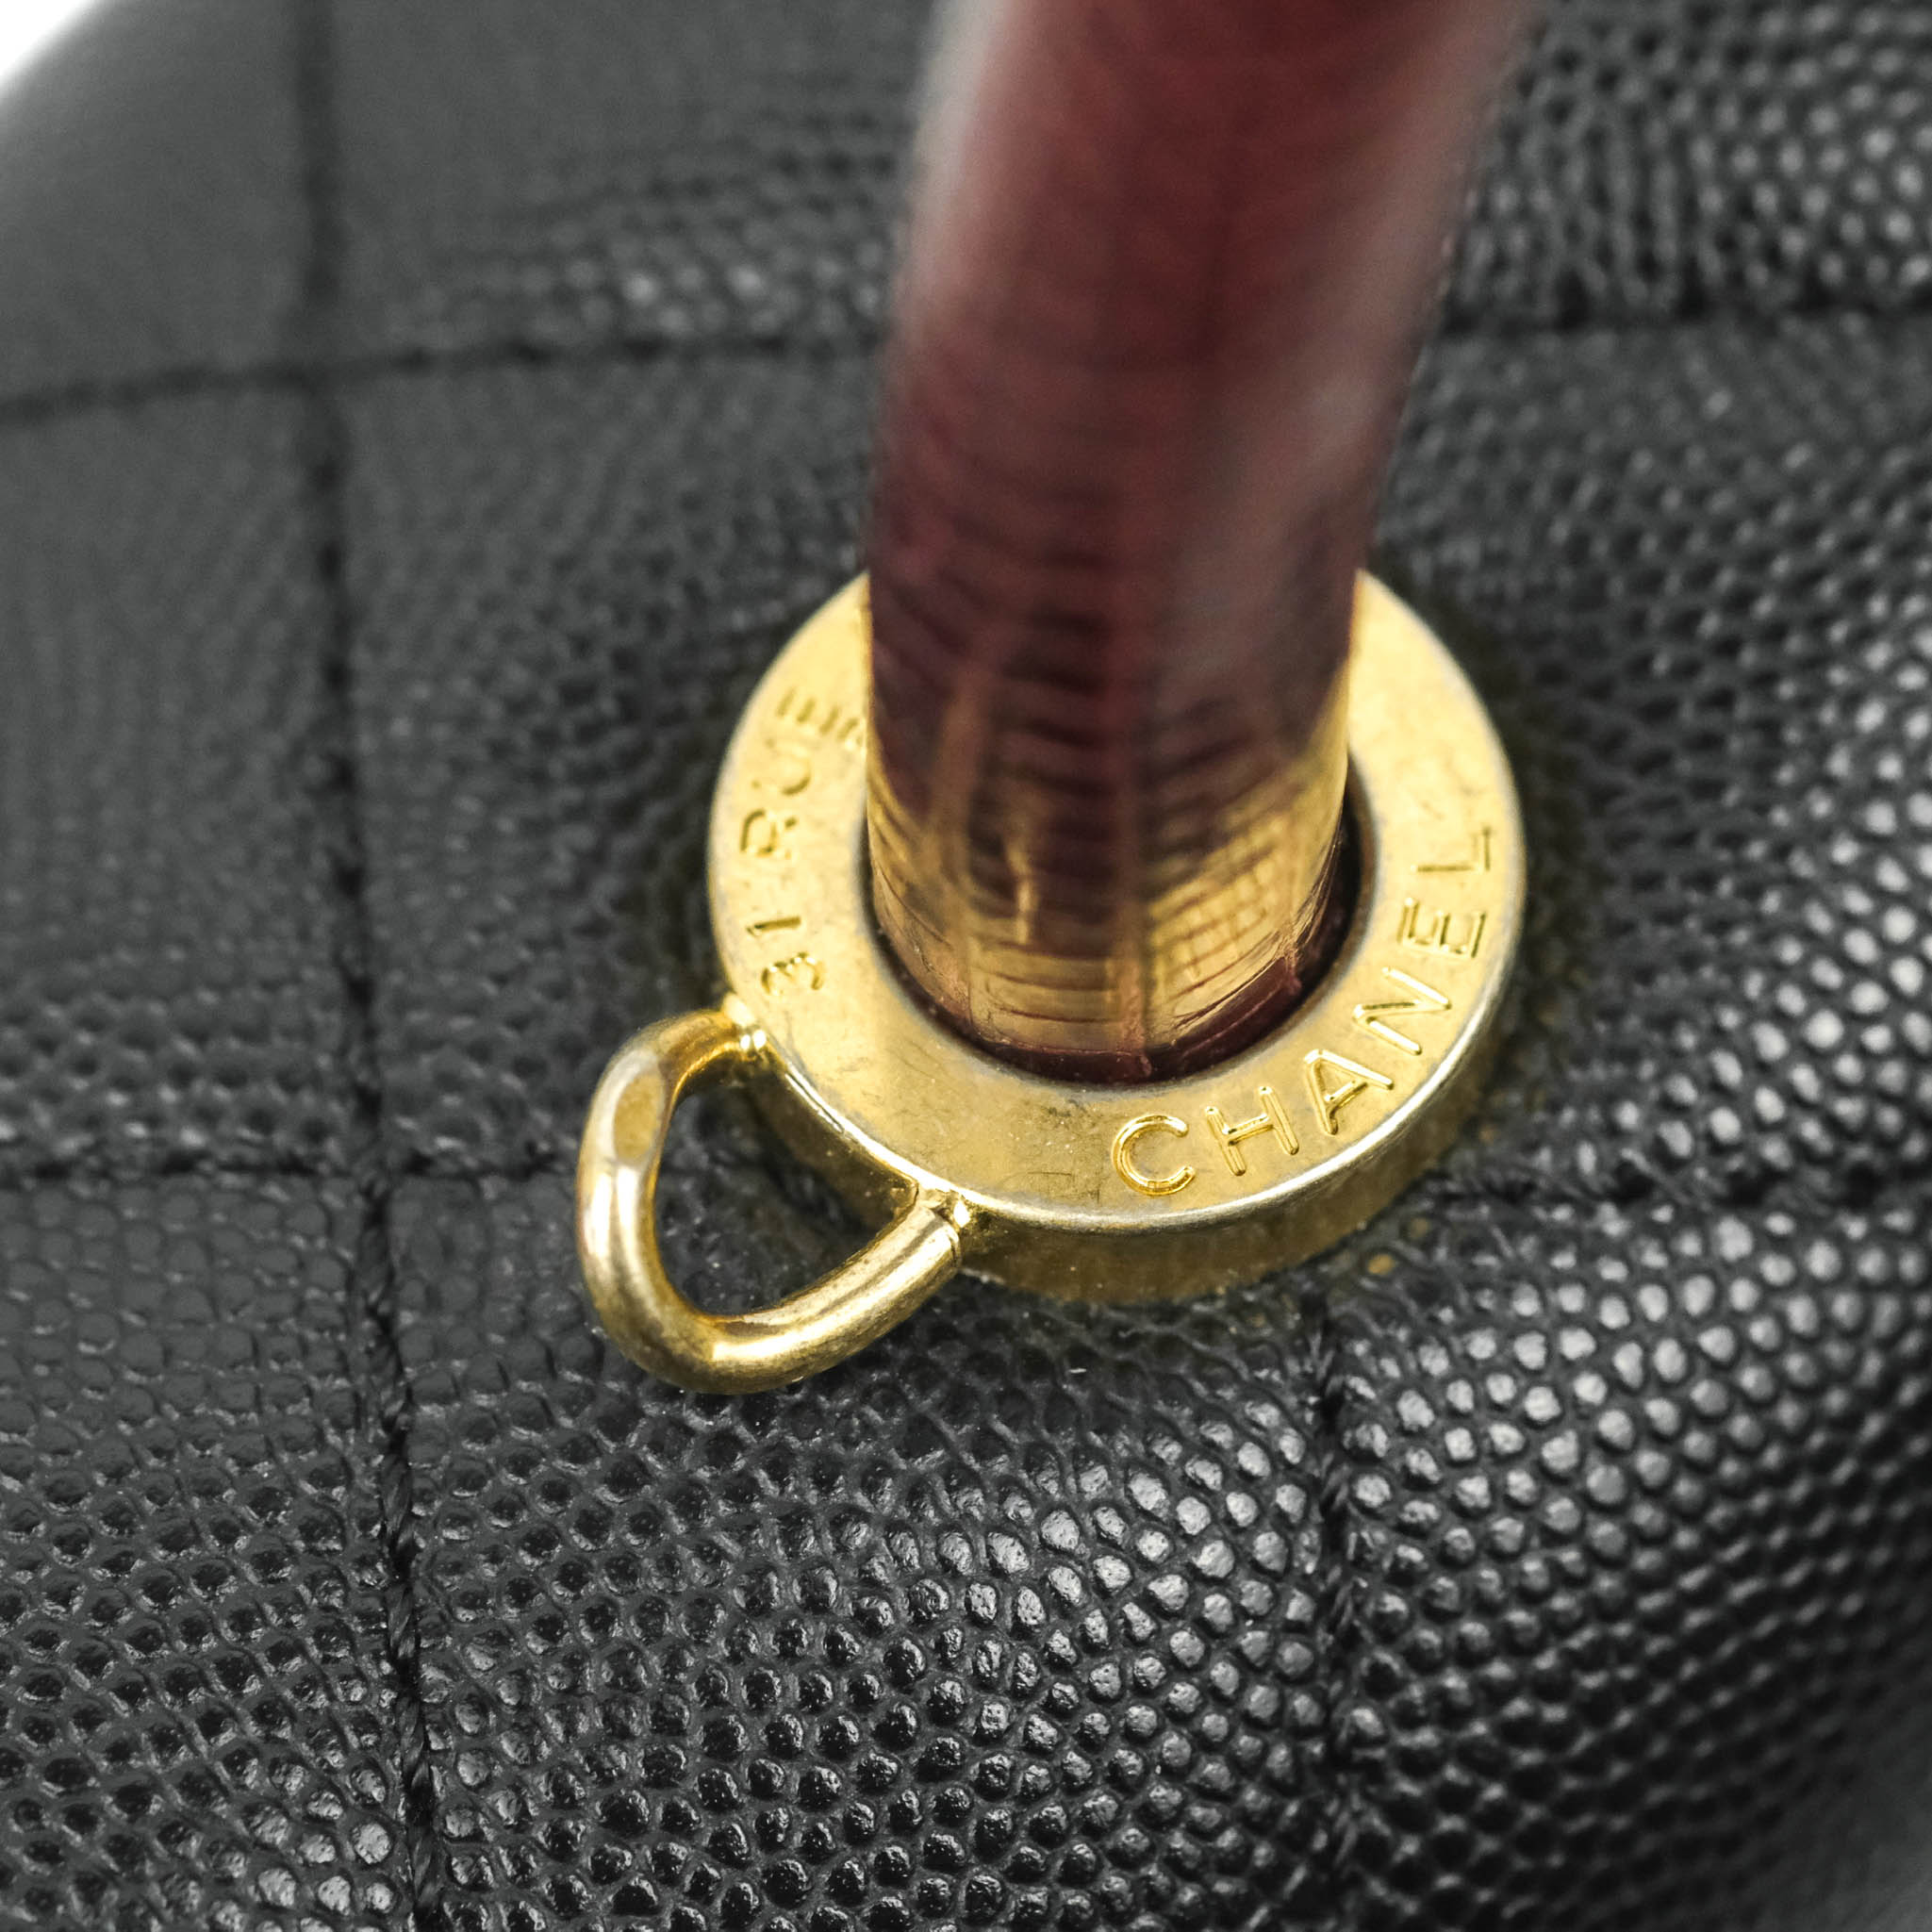 CHANEL Coco Mini Top Lizard Handle Caviar Leather Shoulder Bag Black